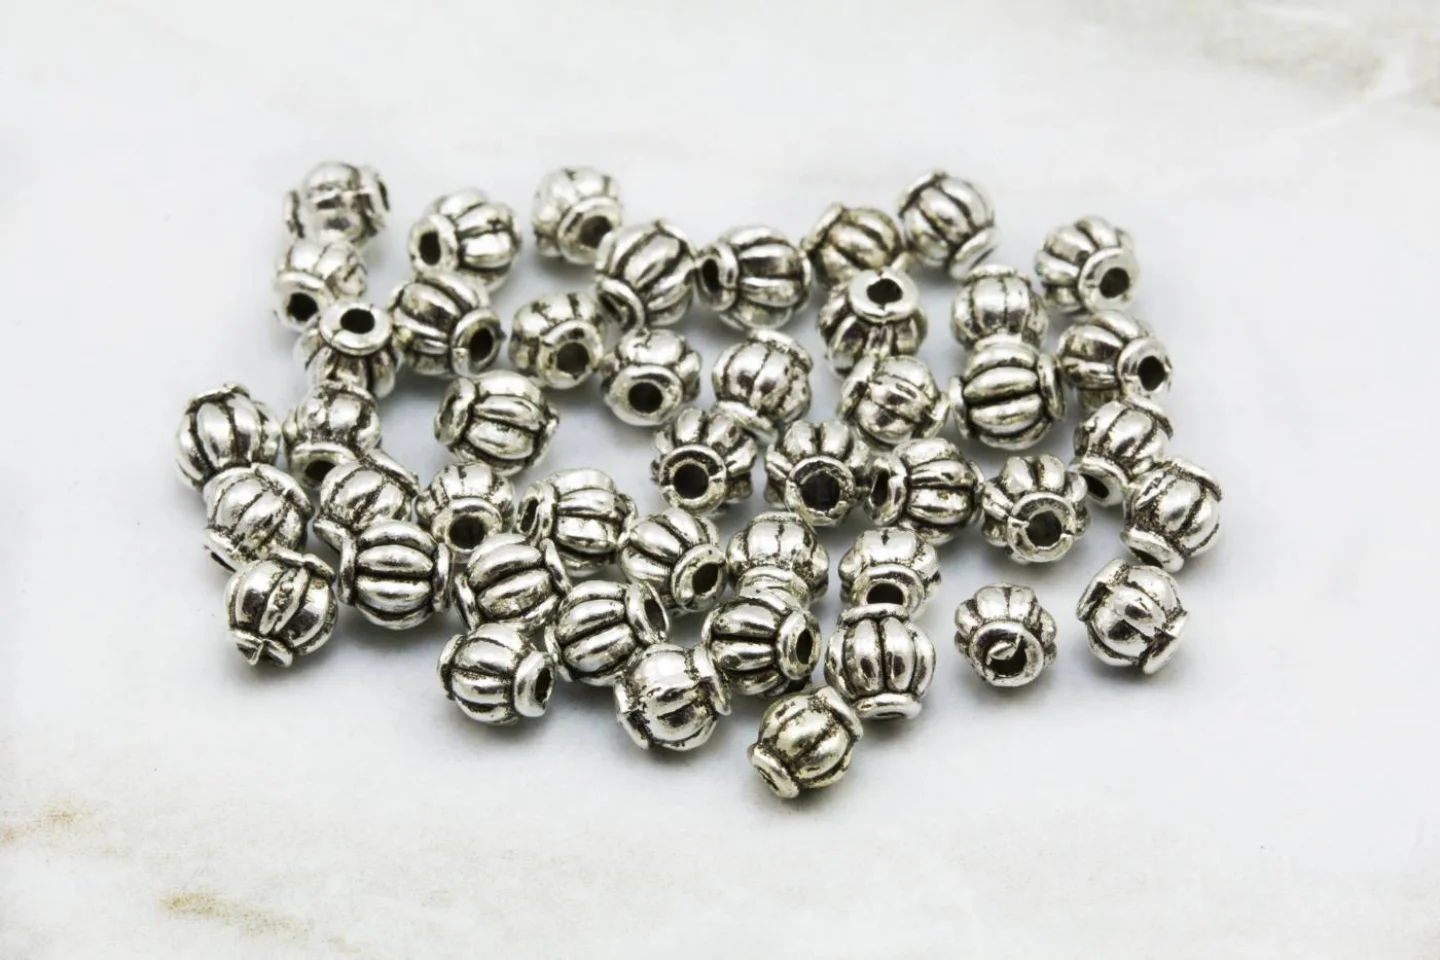 4mm-round-ball-jewelry-spacer-beads.